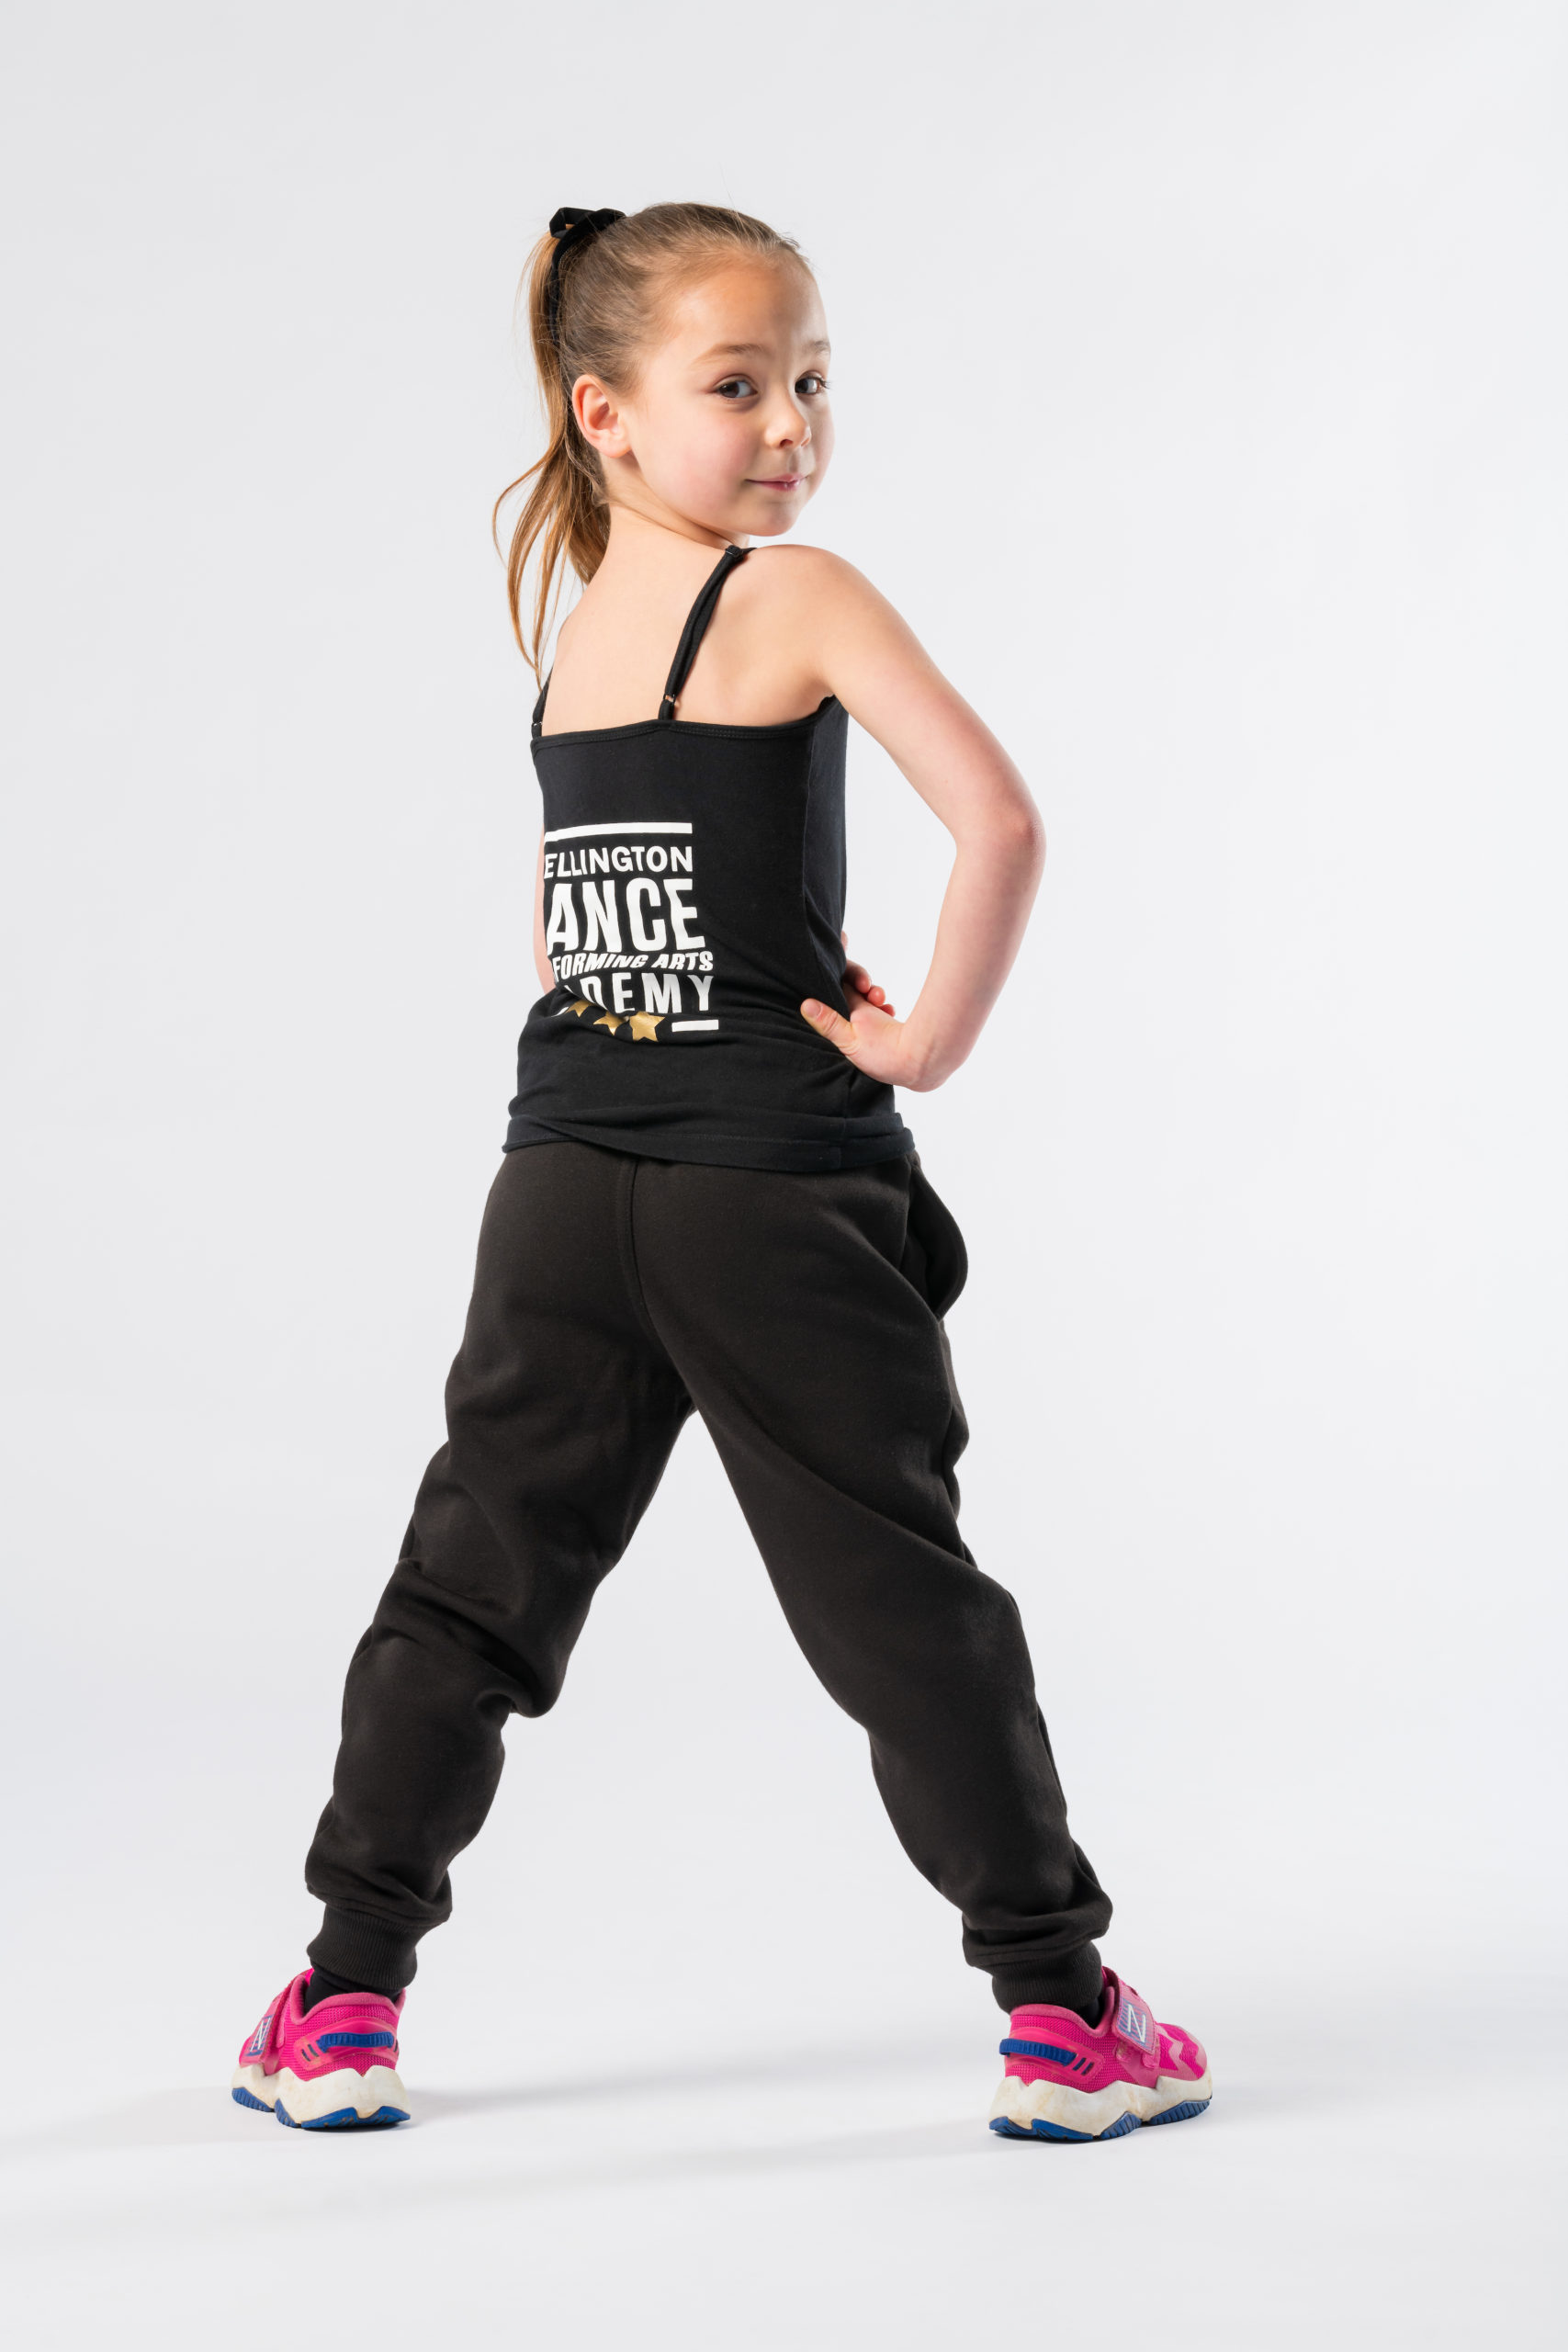 Hip Hop Style Dancer Posing On Stock Photo 22064305 | Shutterstock